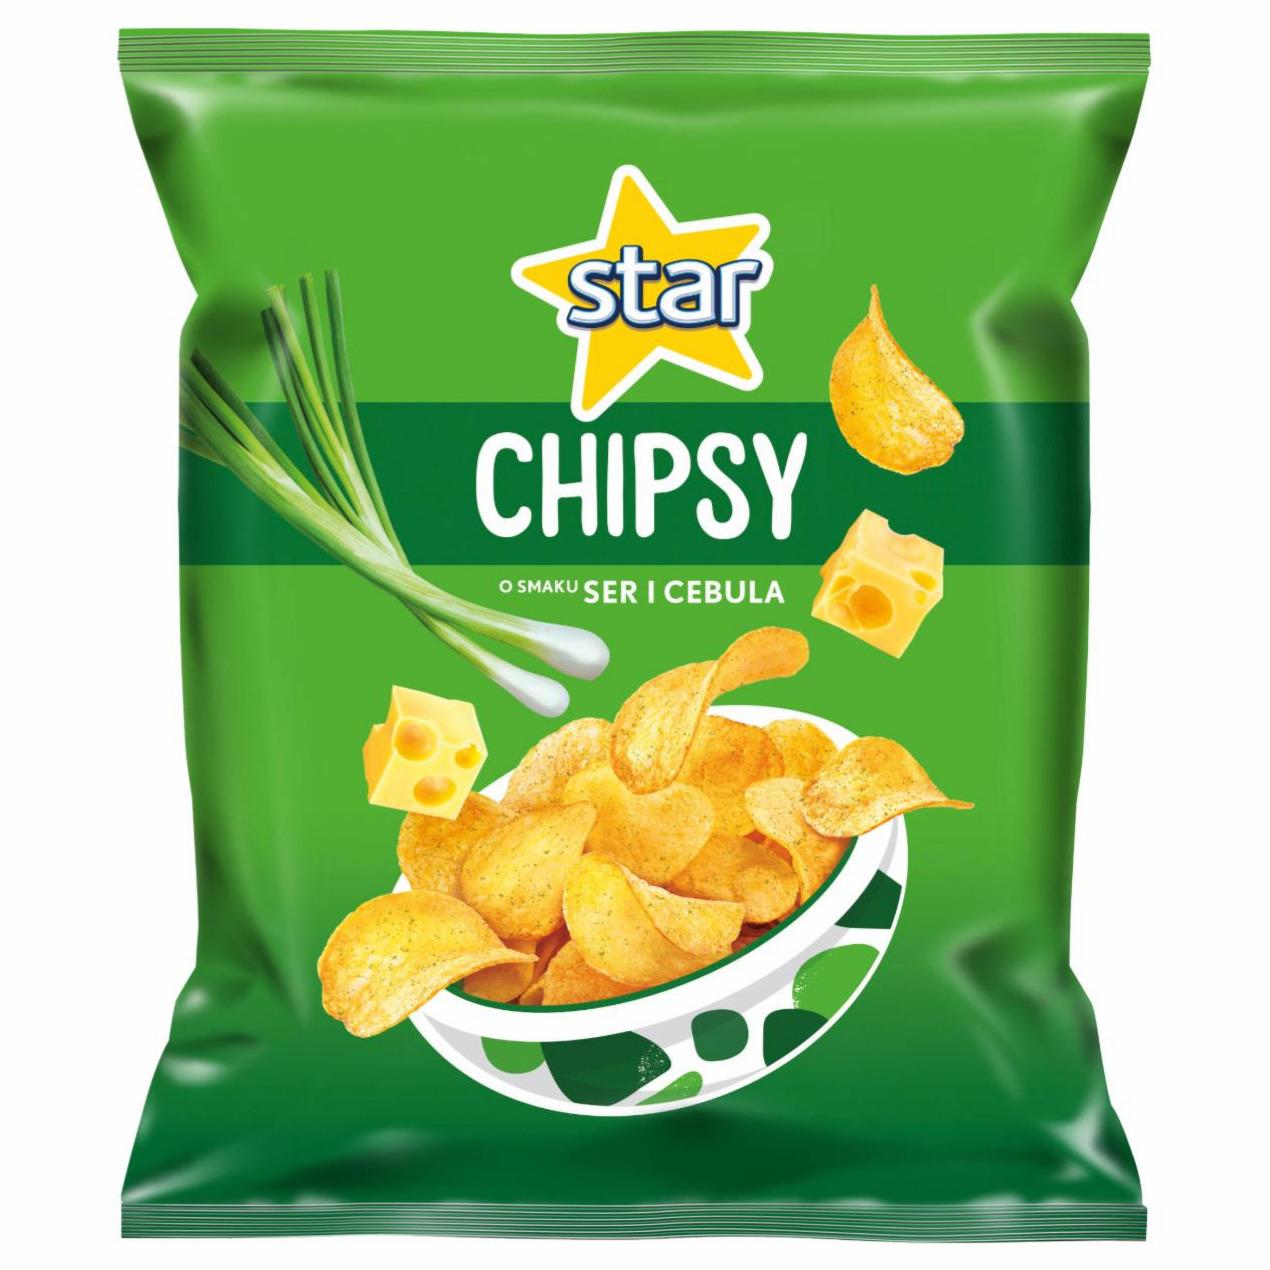 Zdjęcia - Star Chipsy o smaku sera i cebula 22 g